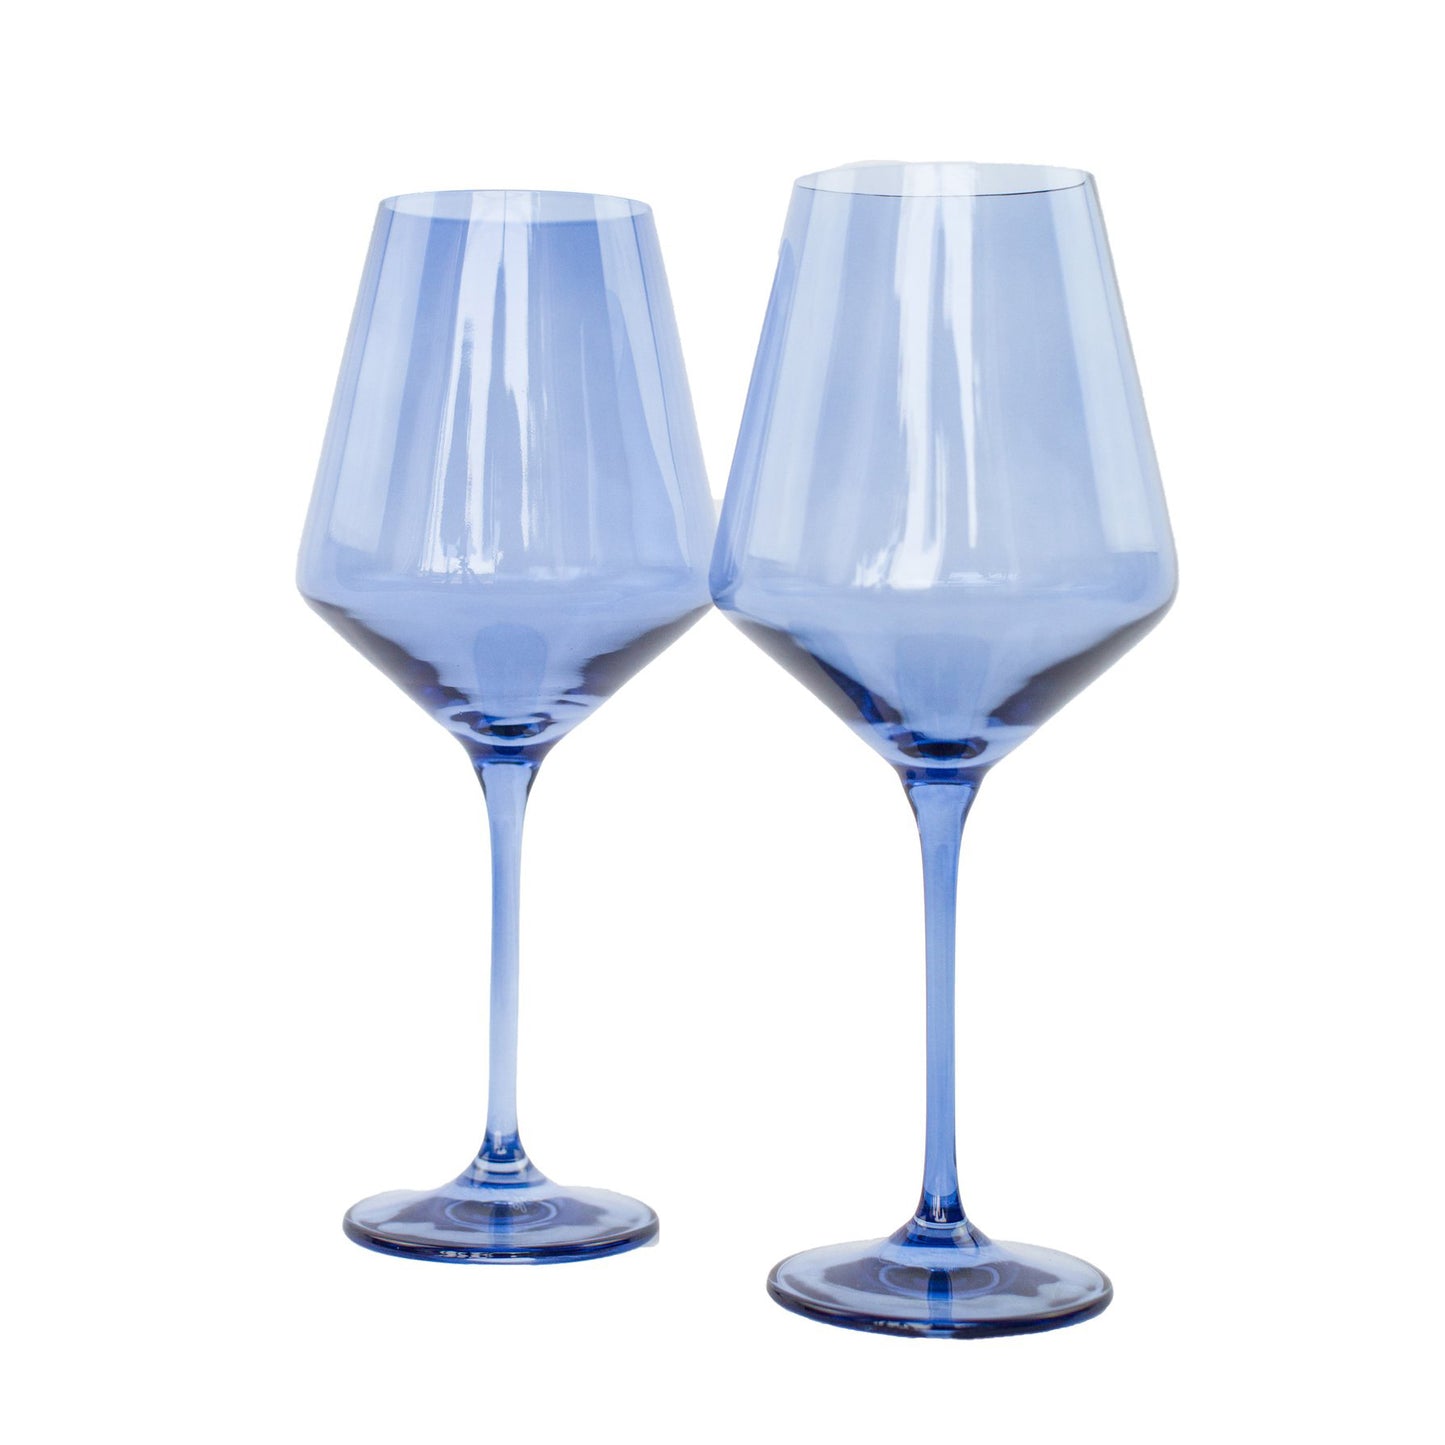 Handblown Cobalt Blue Colored Wine Glass